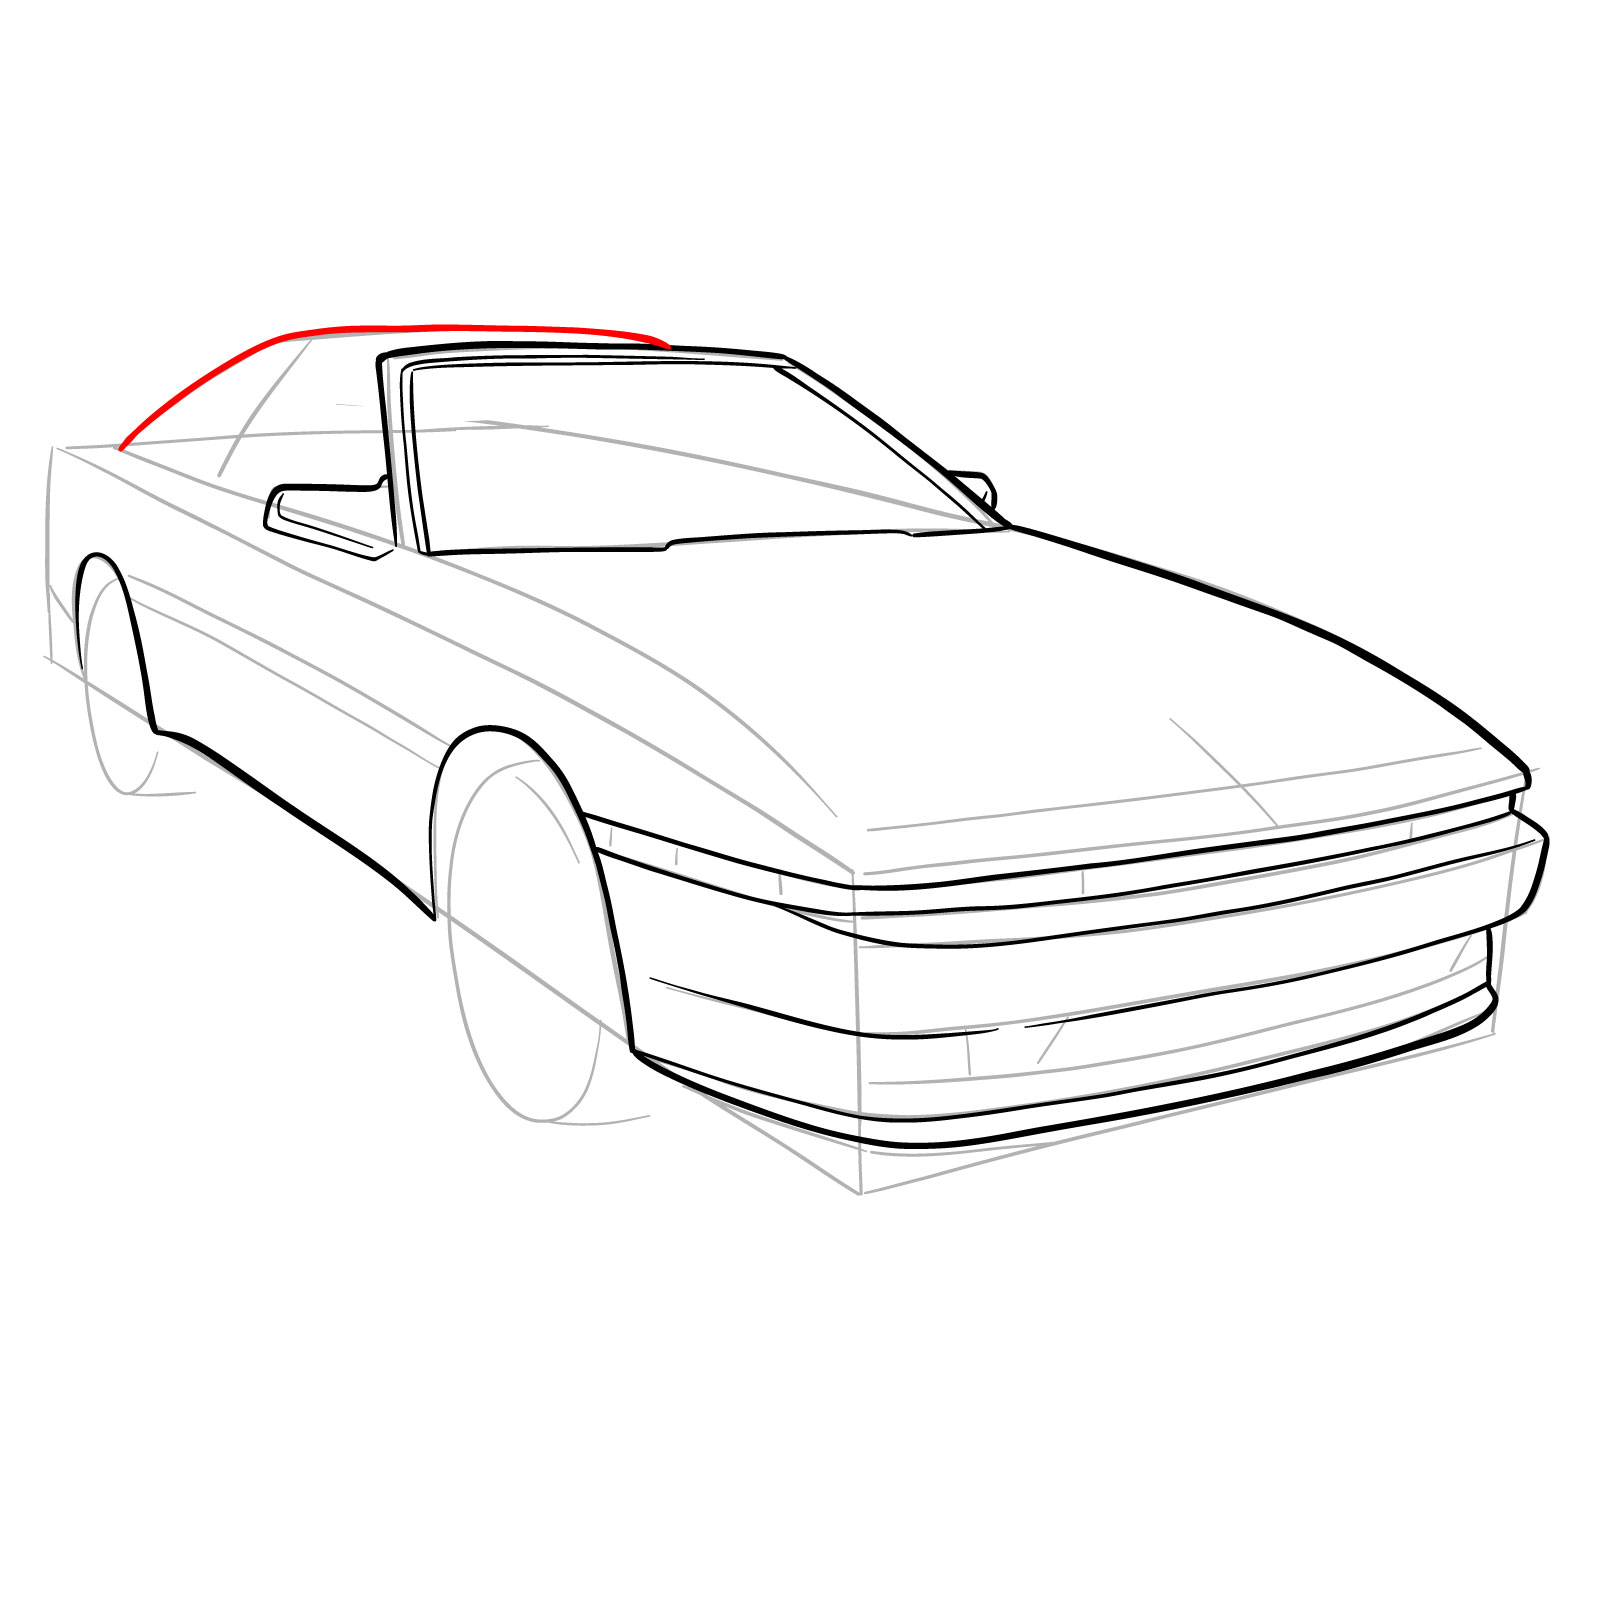 How to draw a 1988 Toyota Supra Turbo MK 3 - step 13